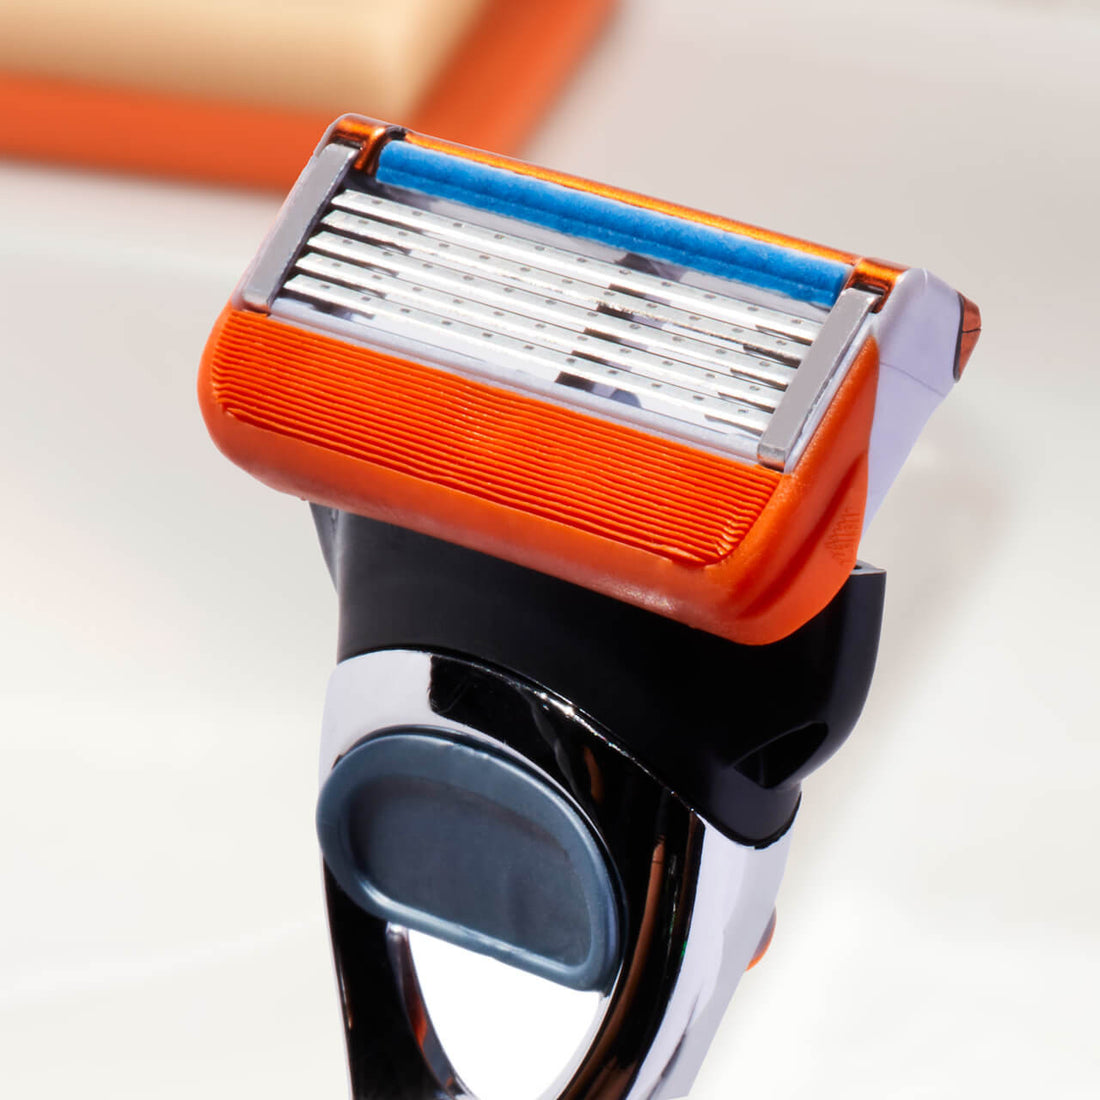 Gillette Fusion5 Razor Review: A Versatile Shaving Companion with a Few Considerations